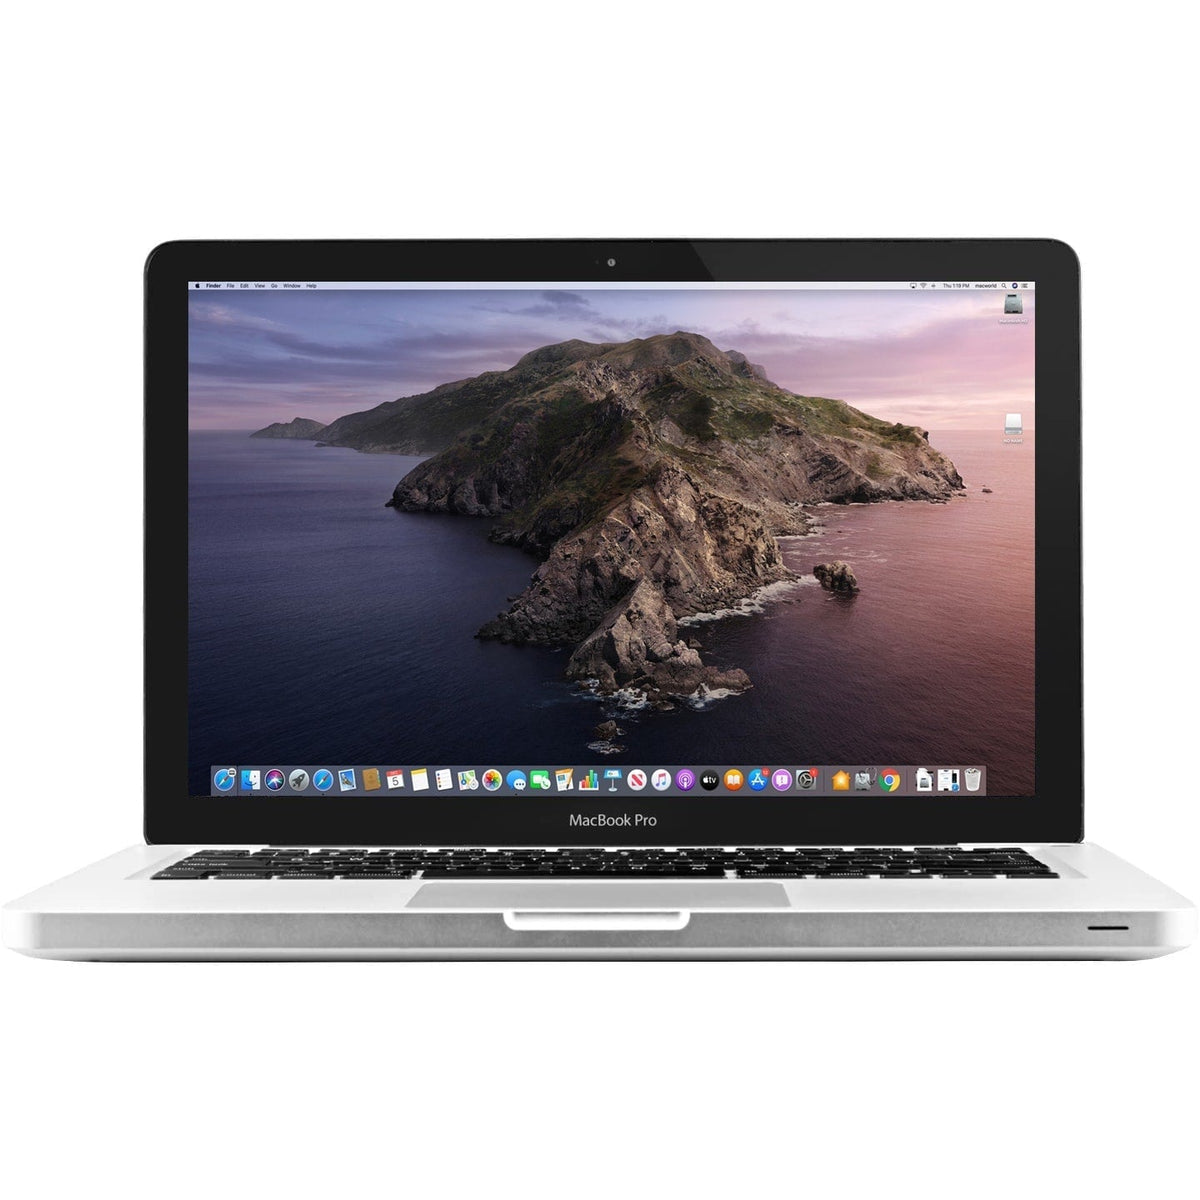 Apple MacBook Pro 13" (Mid 2012) 2.5GHz Intel Core i5 500GB 4GB RAM - Very Good Condition